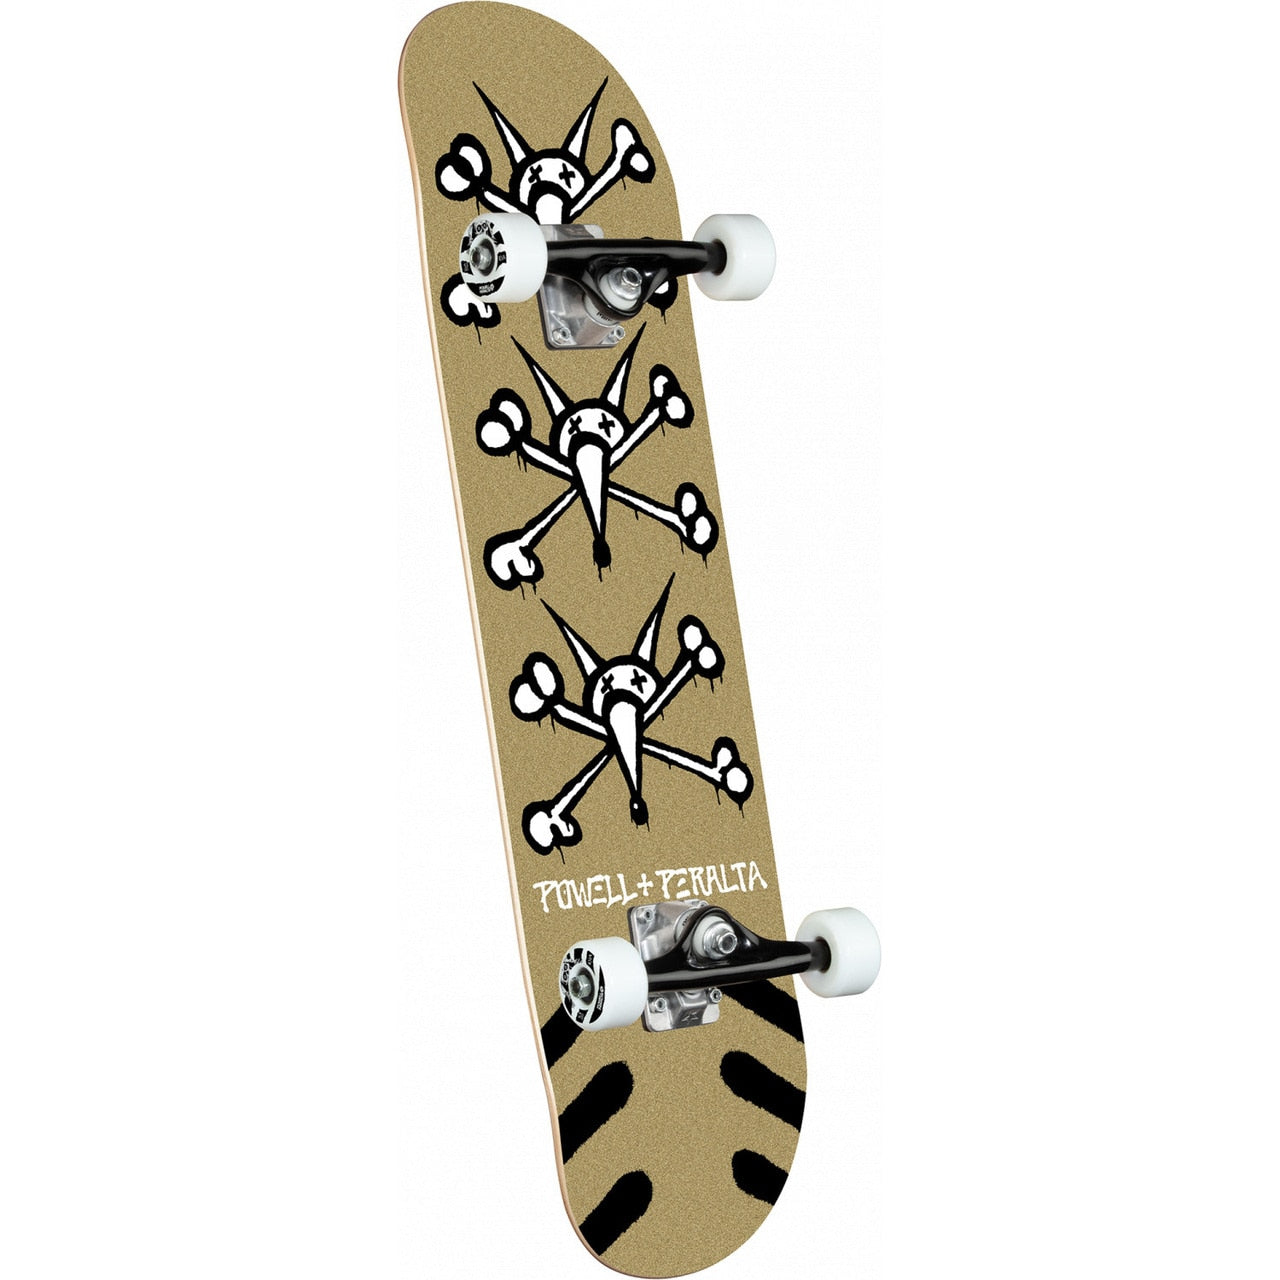 Gold 8.0" Vato Rat Powell Peralta Complete Skateboard